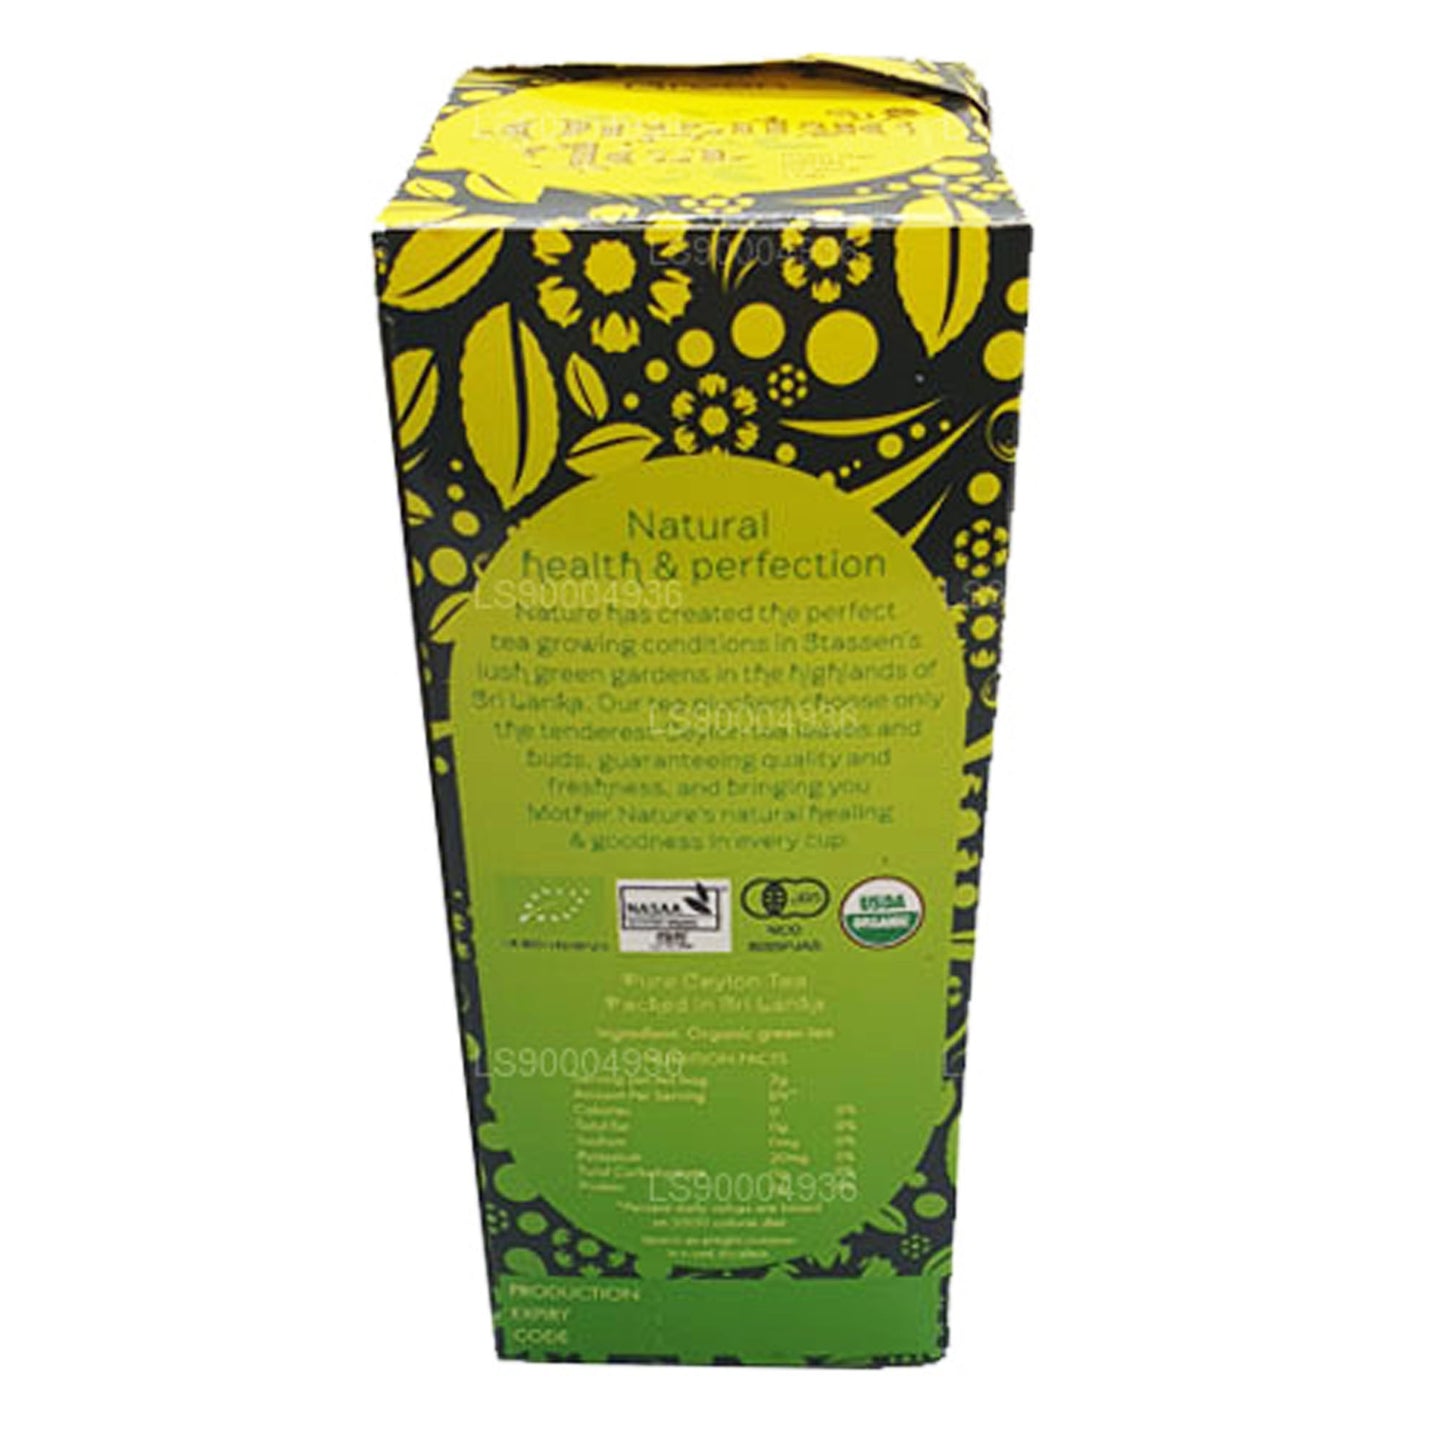 Stassen Green Organic Tea (50g) 25 Tea Bags